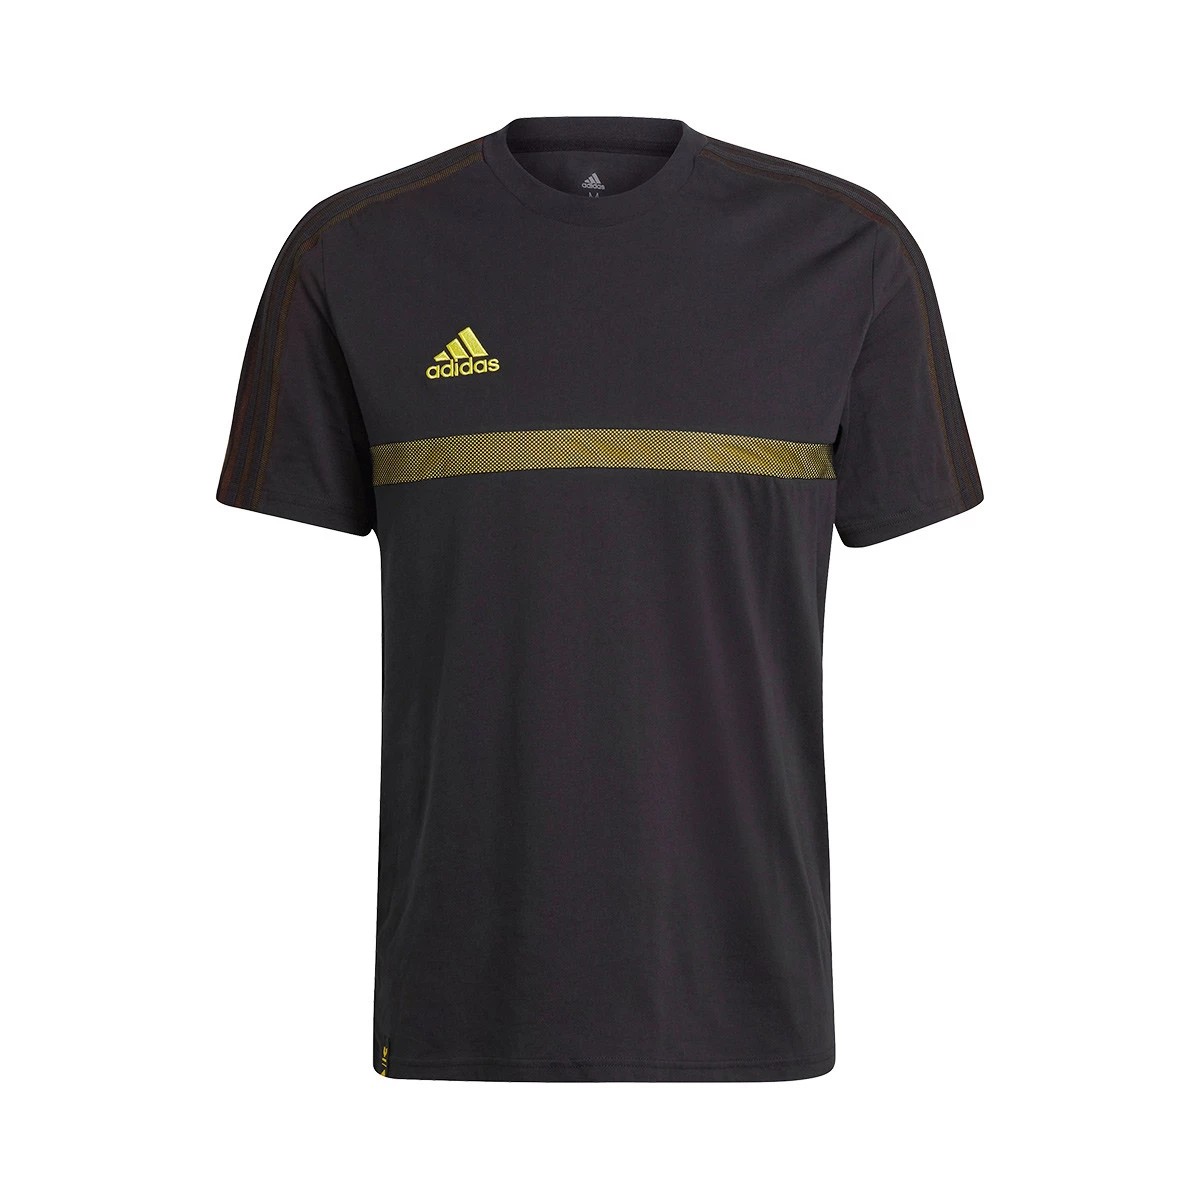 Adidas Lionel Messi tričko čierne pánske